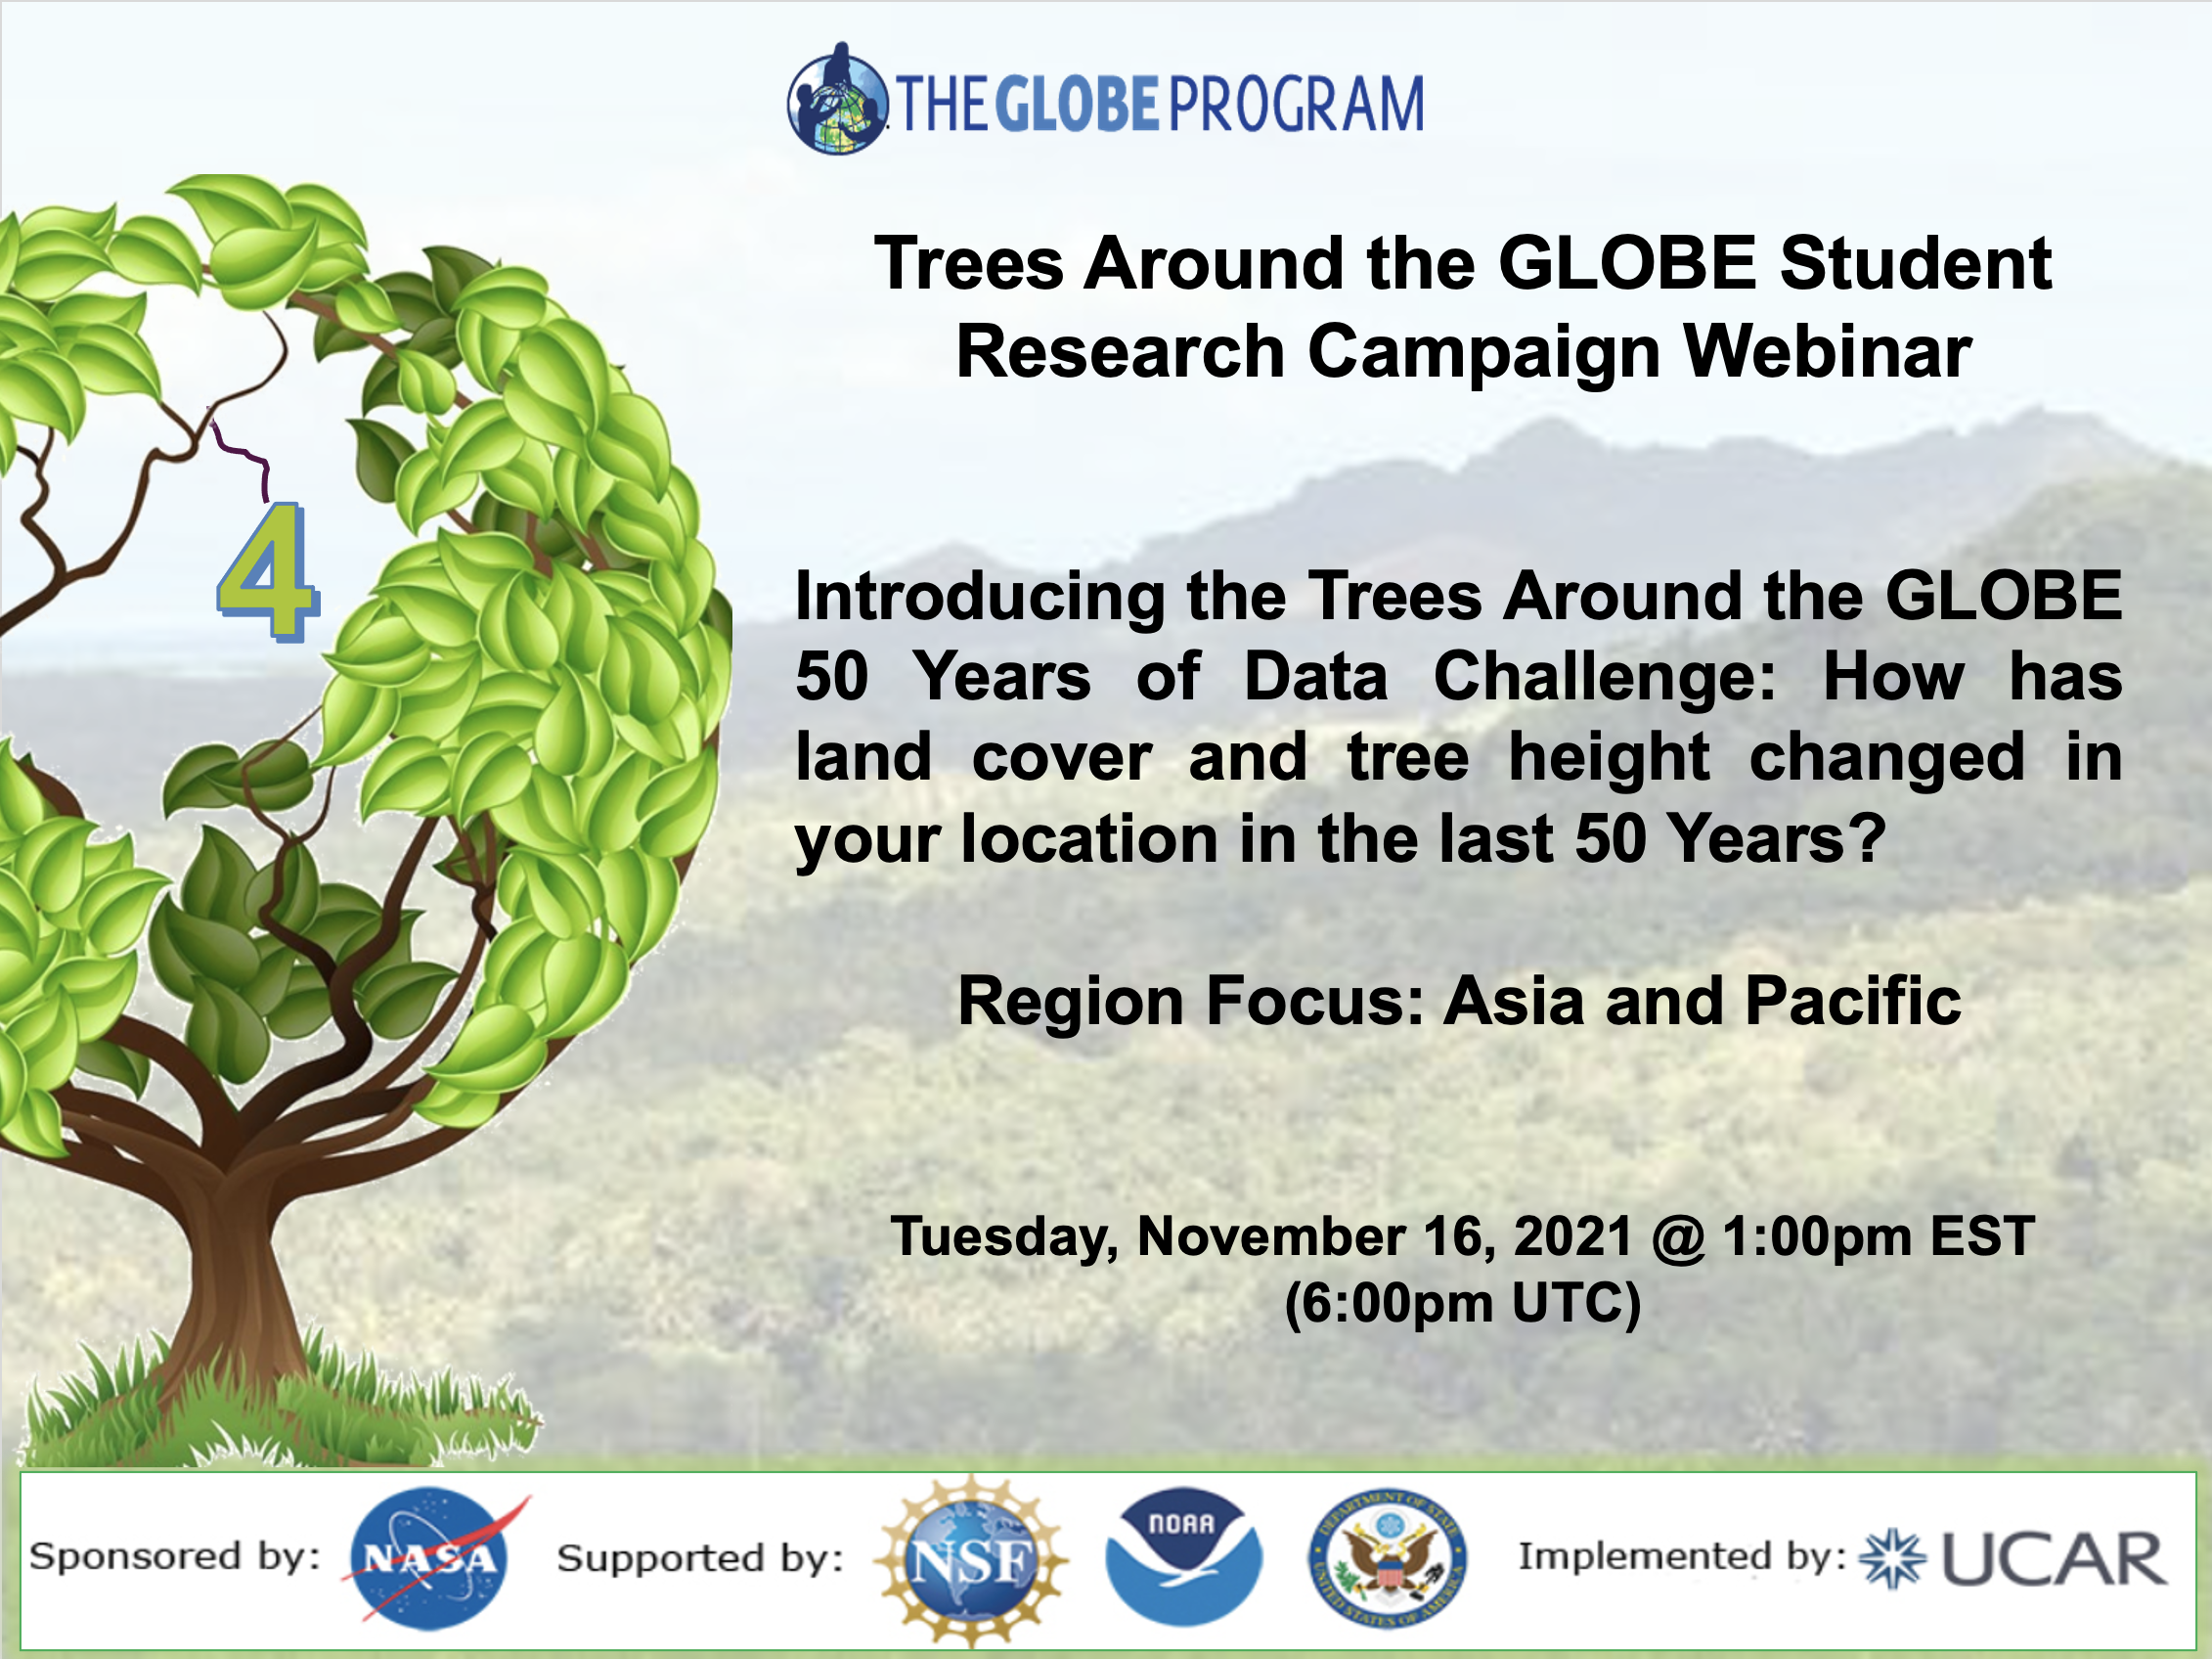 The Trees Around the GLOBE 16 November webinar shareable